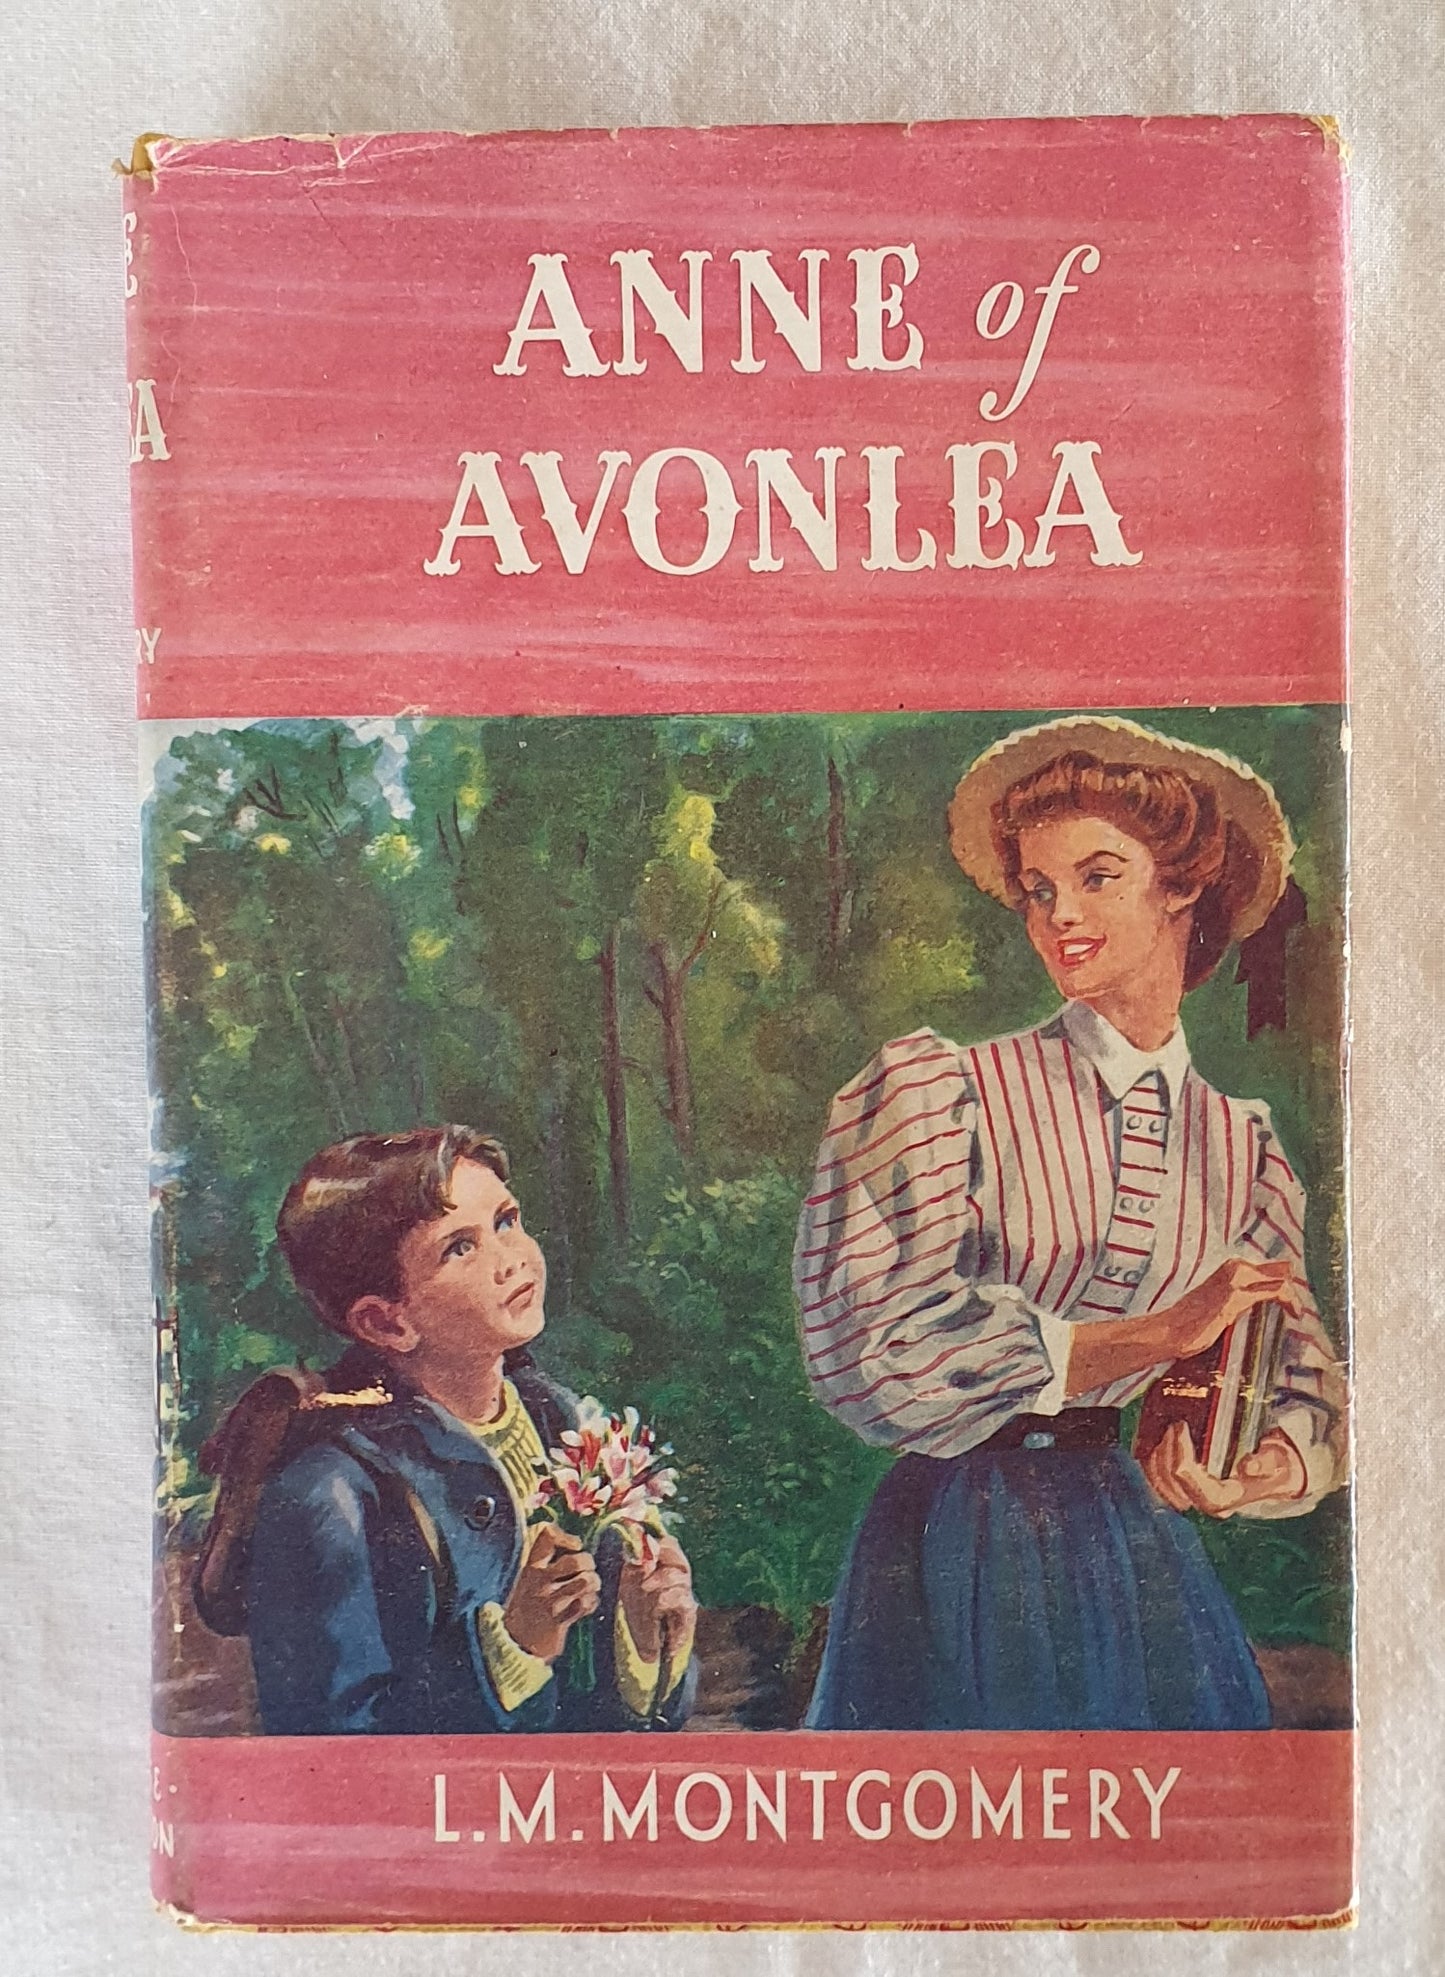 Anne of Avonlea by L. M. Montgomery